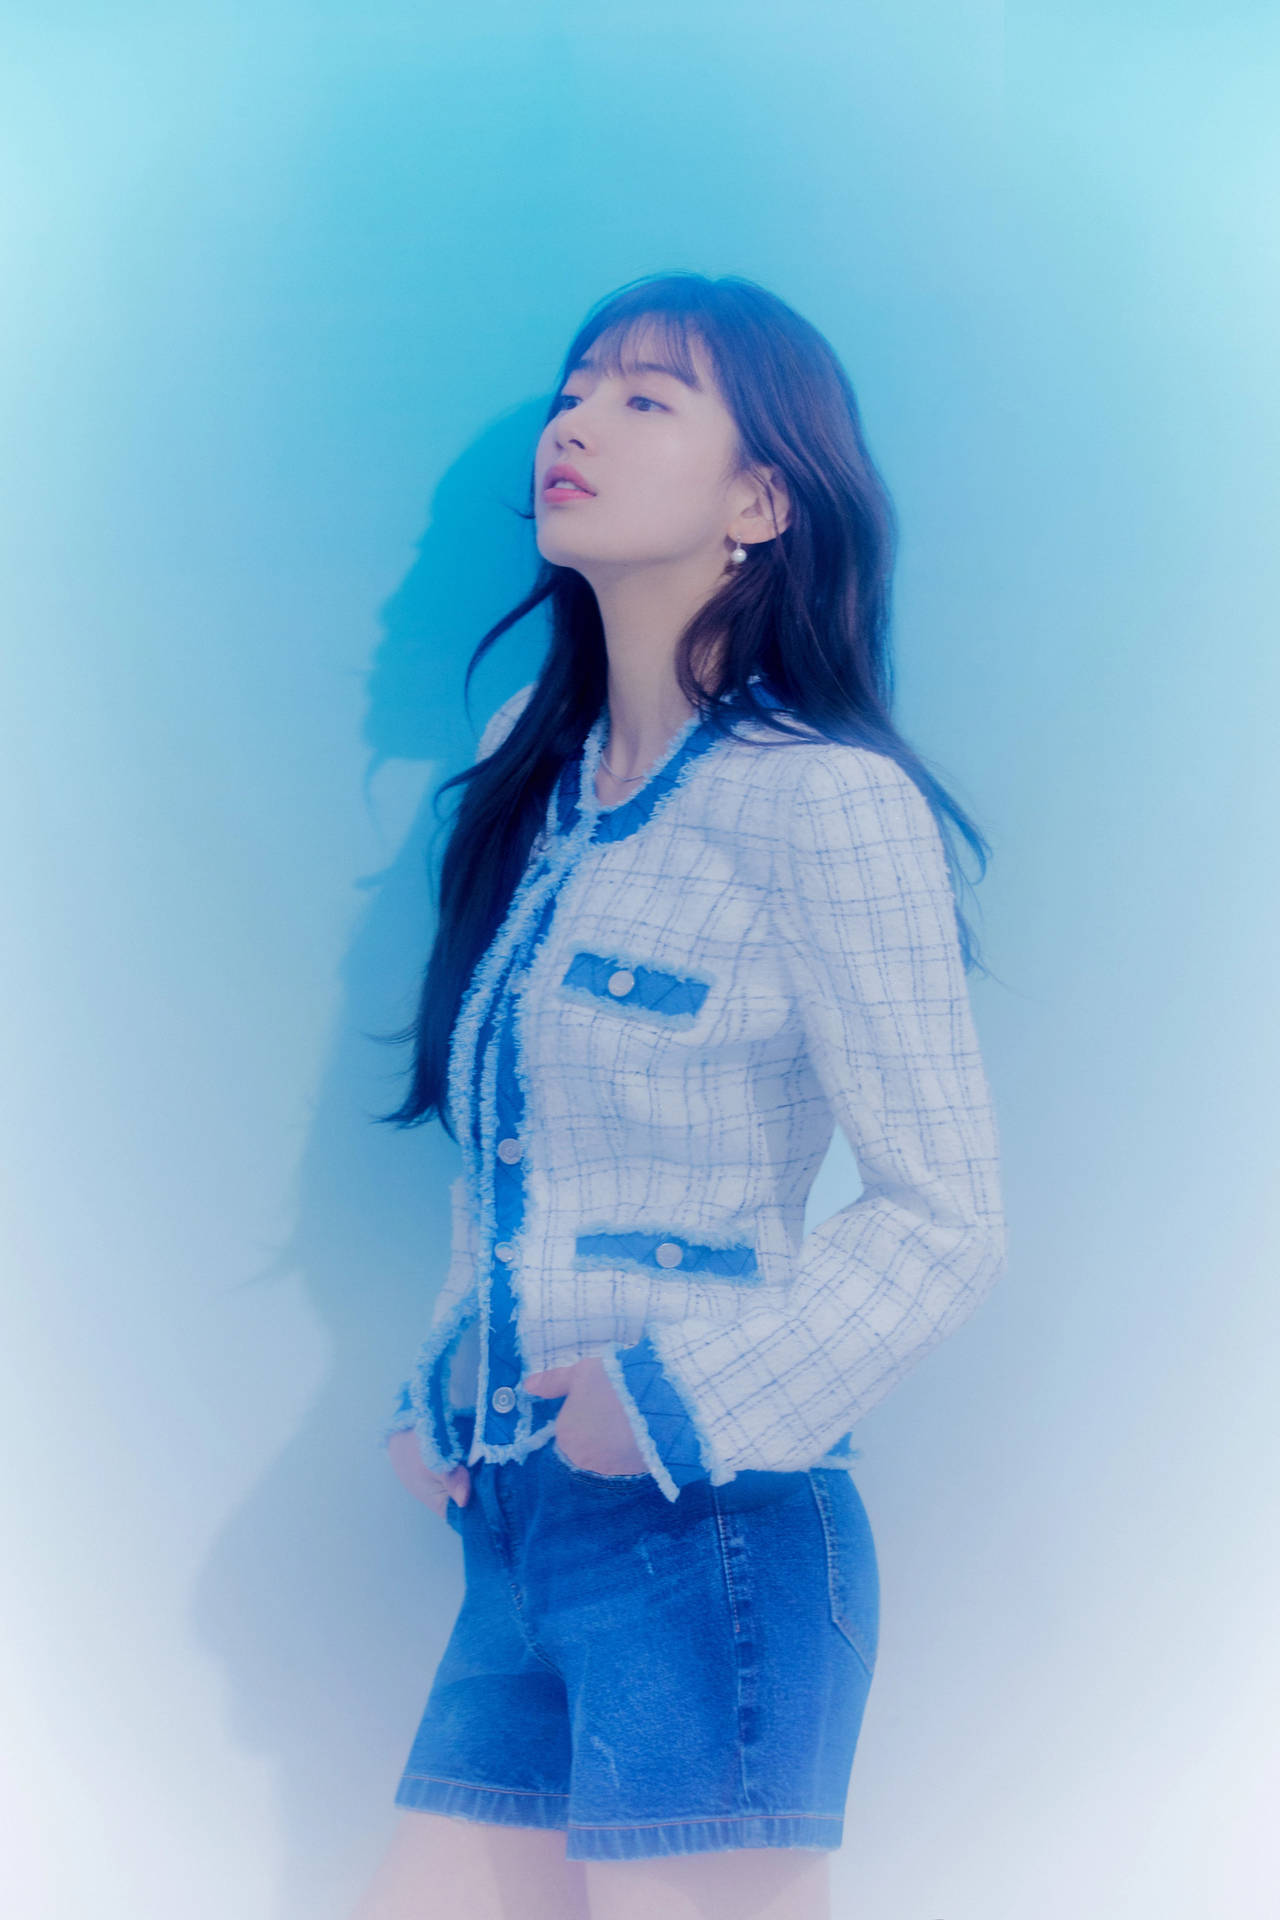 Bae Suzy Blue Theme Shoot Background